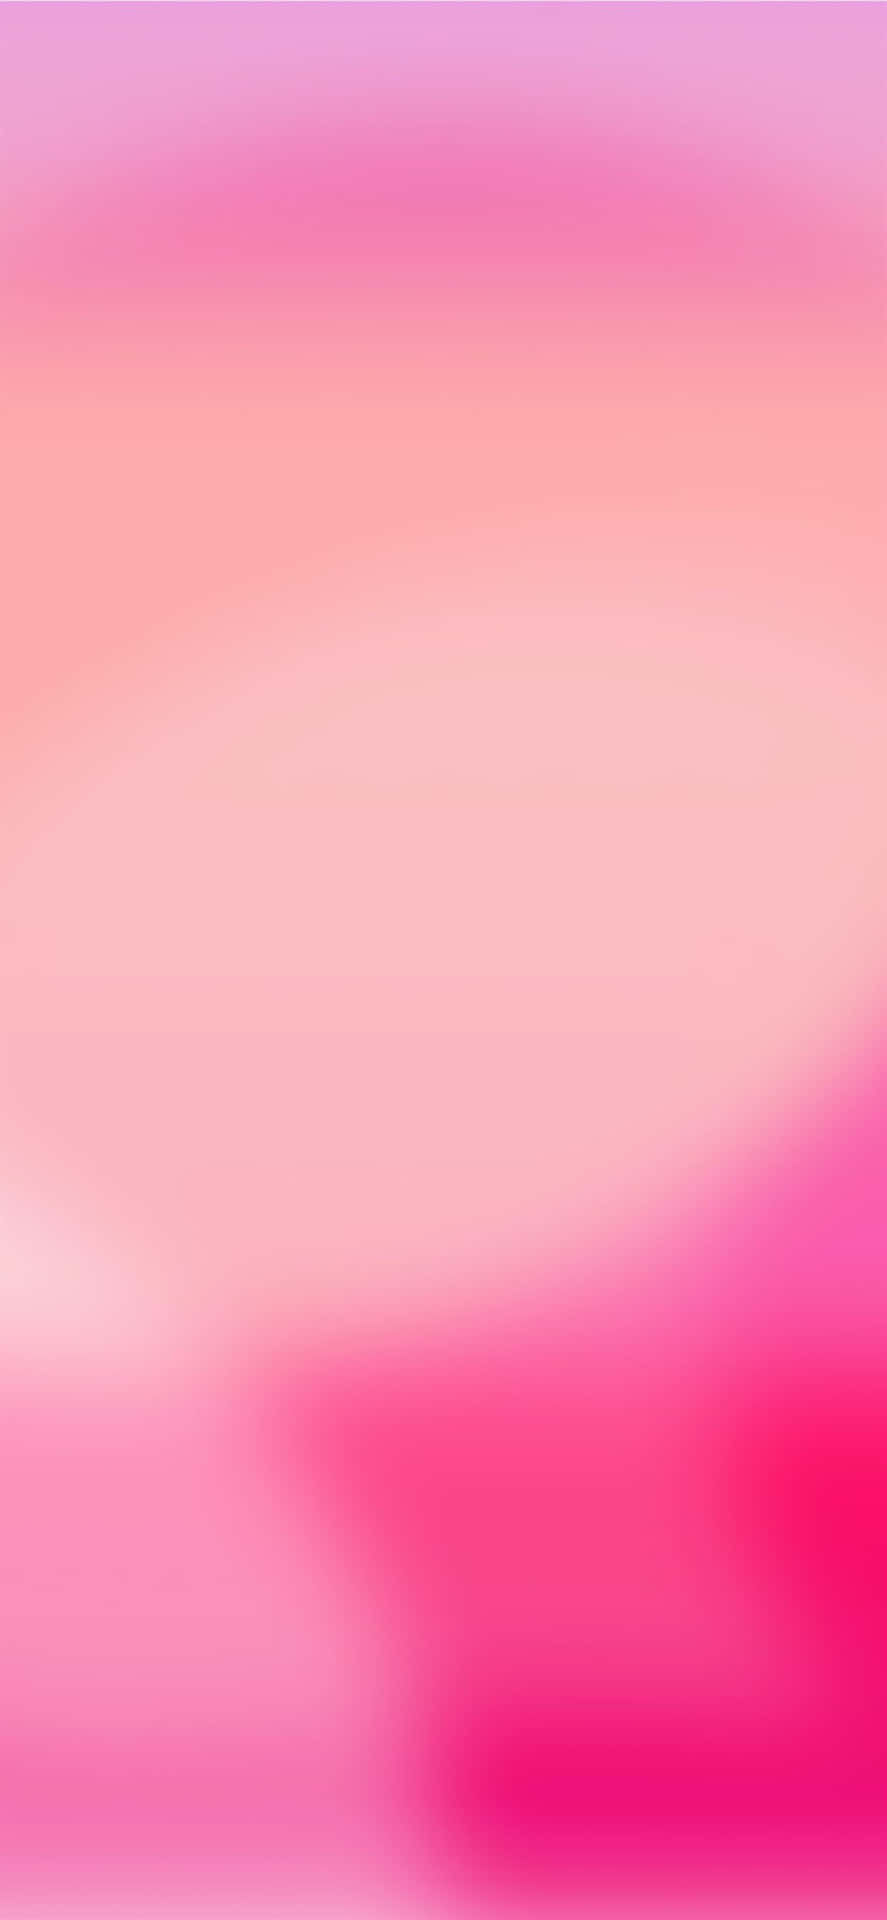 A beautiful pastel-pink iPhone Wallpaper